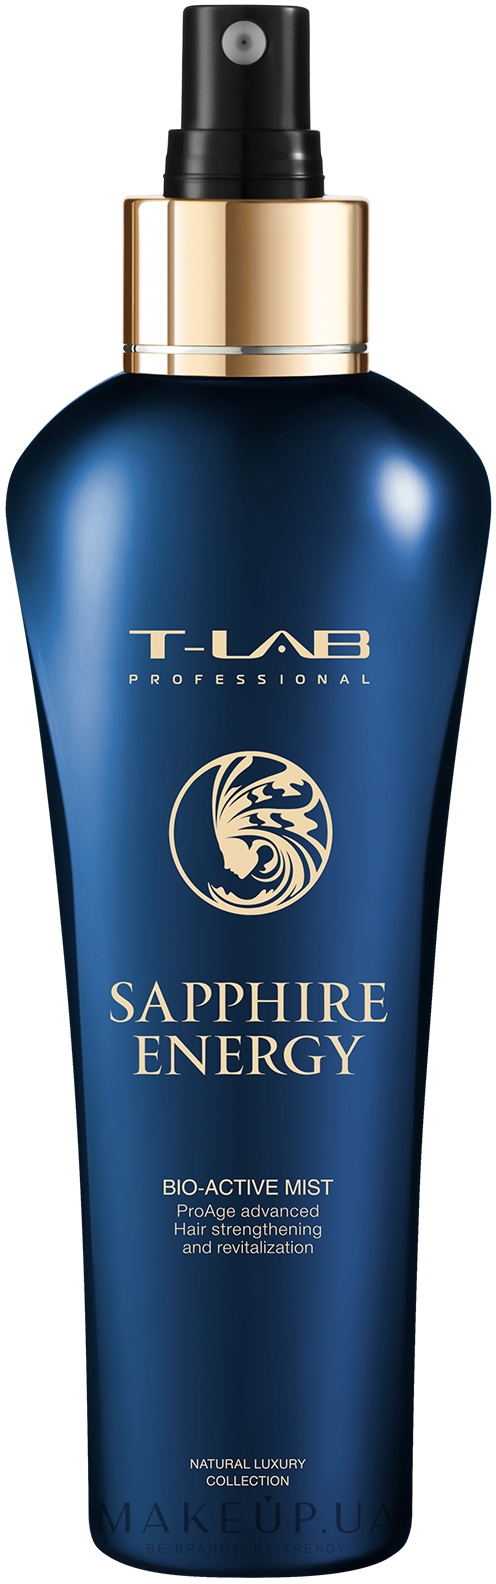 Спрей для сили й антиейдж ефекту волосся - T-Lab Professional  Sapphire Energy Bio-Active Mist — фото 150ml